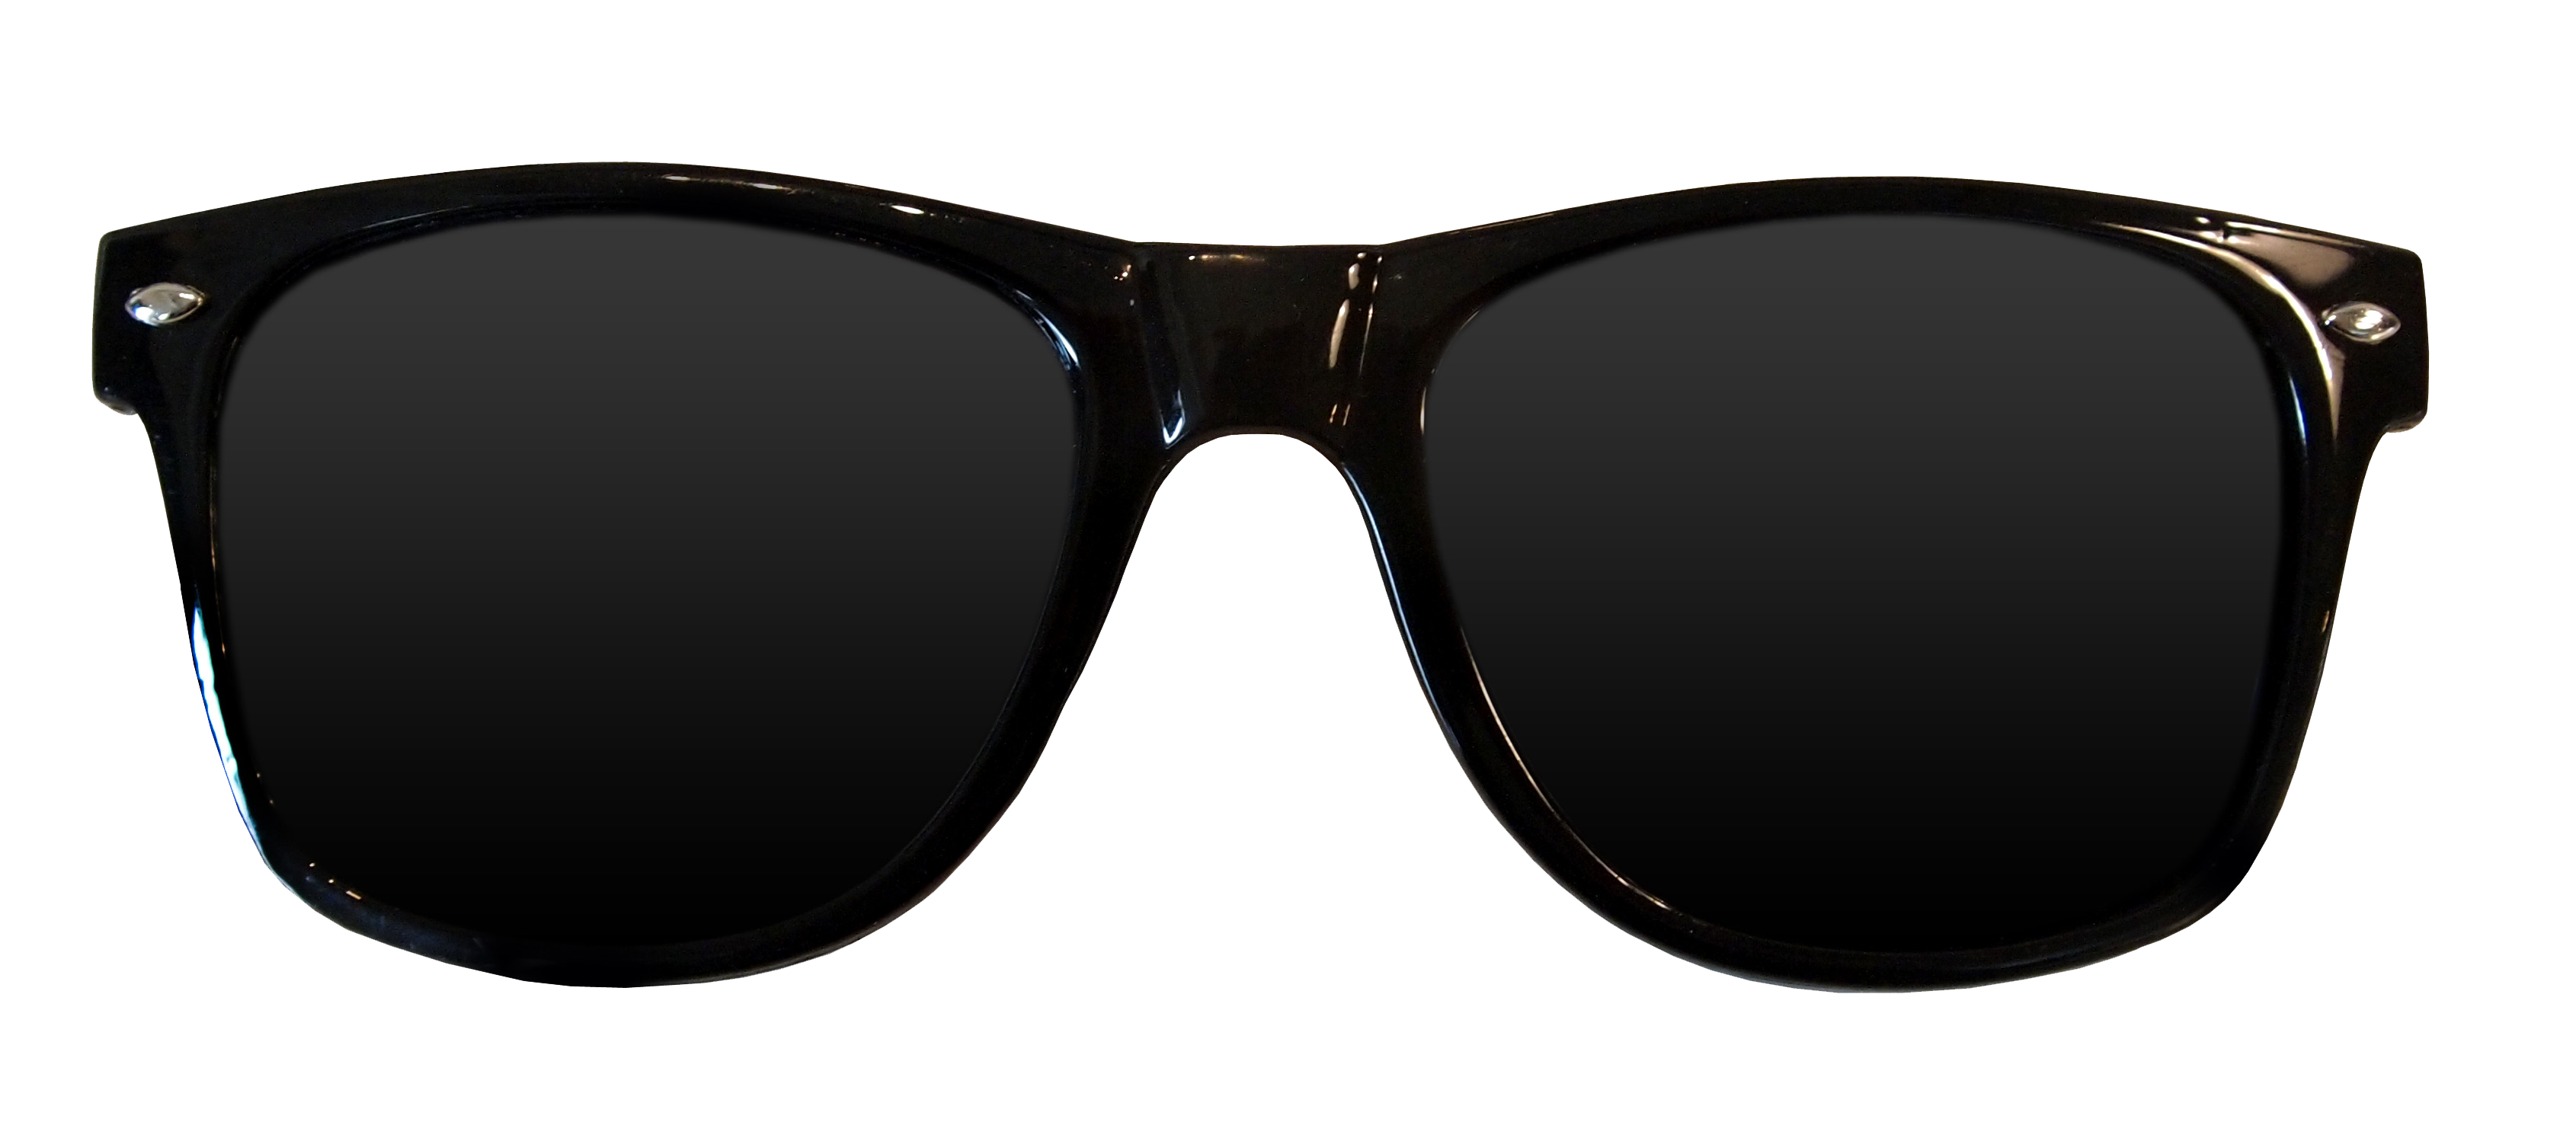 Sunglasses Ray-Ban Wayfarer Lens - Sunglasses Picture png download